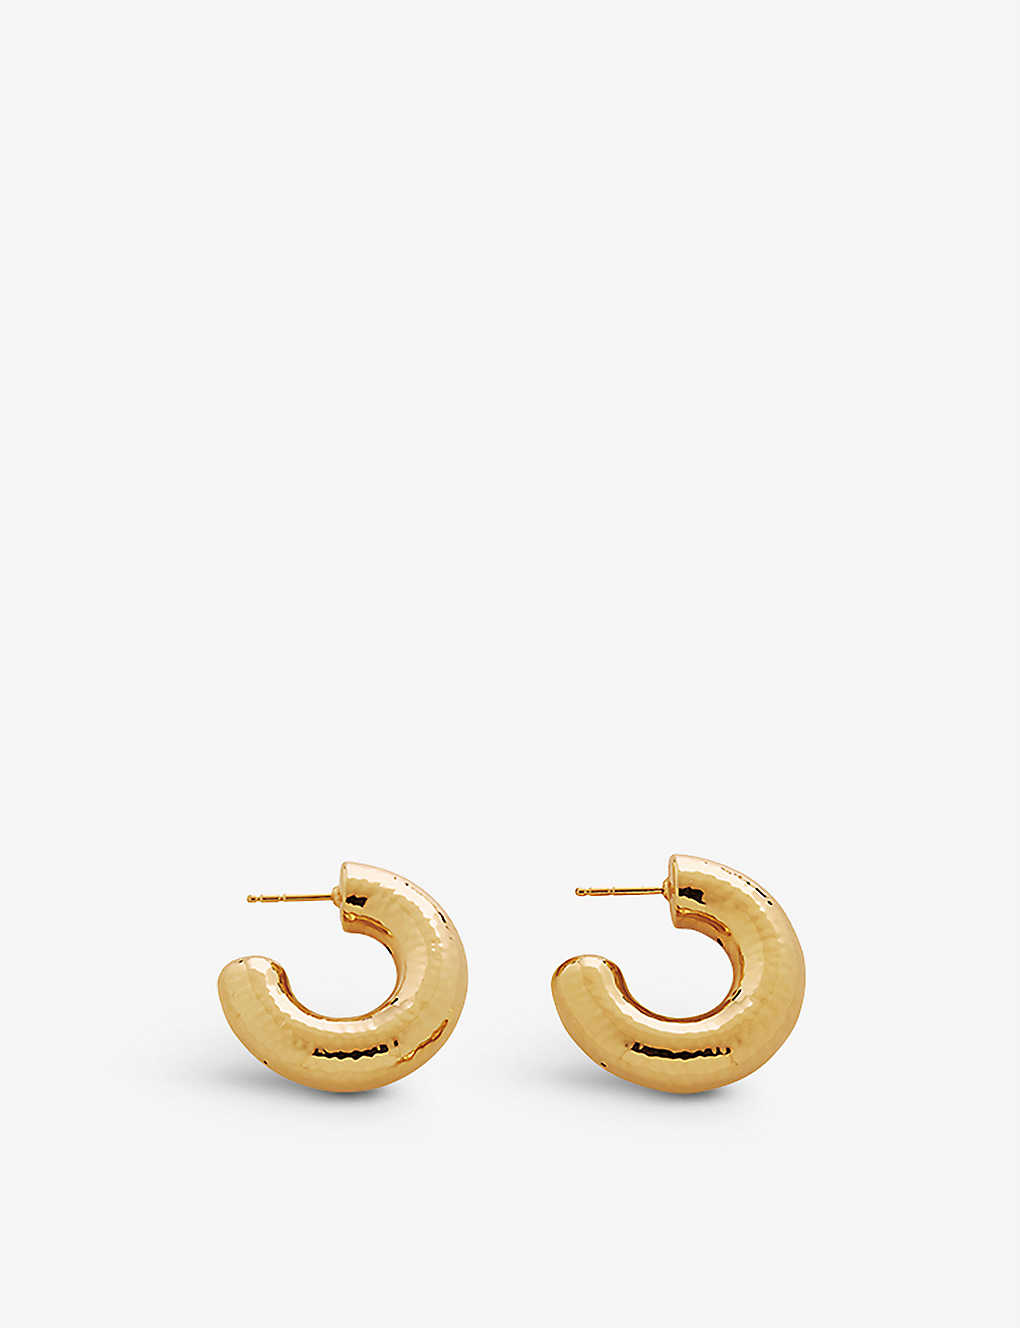 Monica Vinader Muse 18ct Recycled Yellow Gold Vermeil Sterling Silver Hoop Earrings